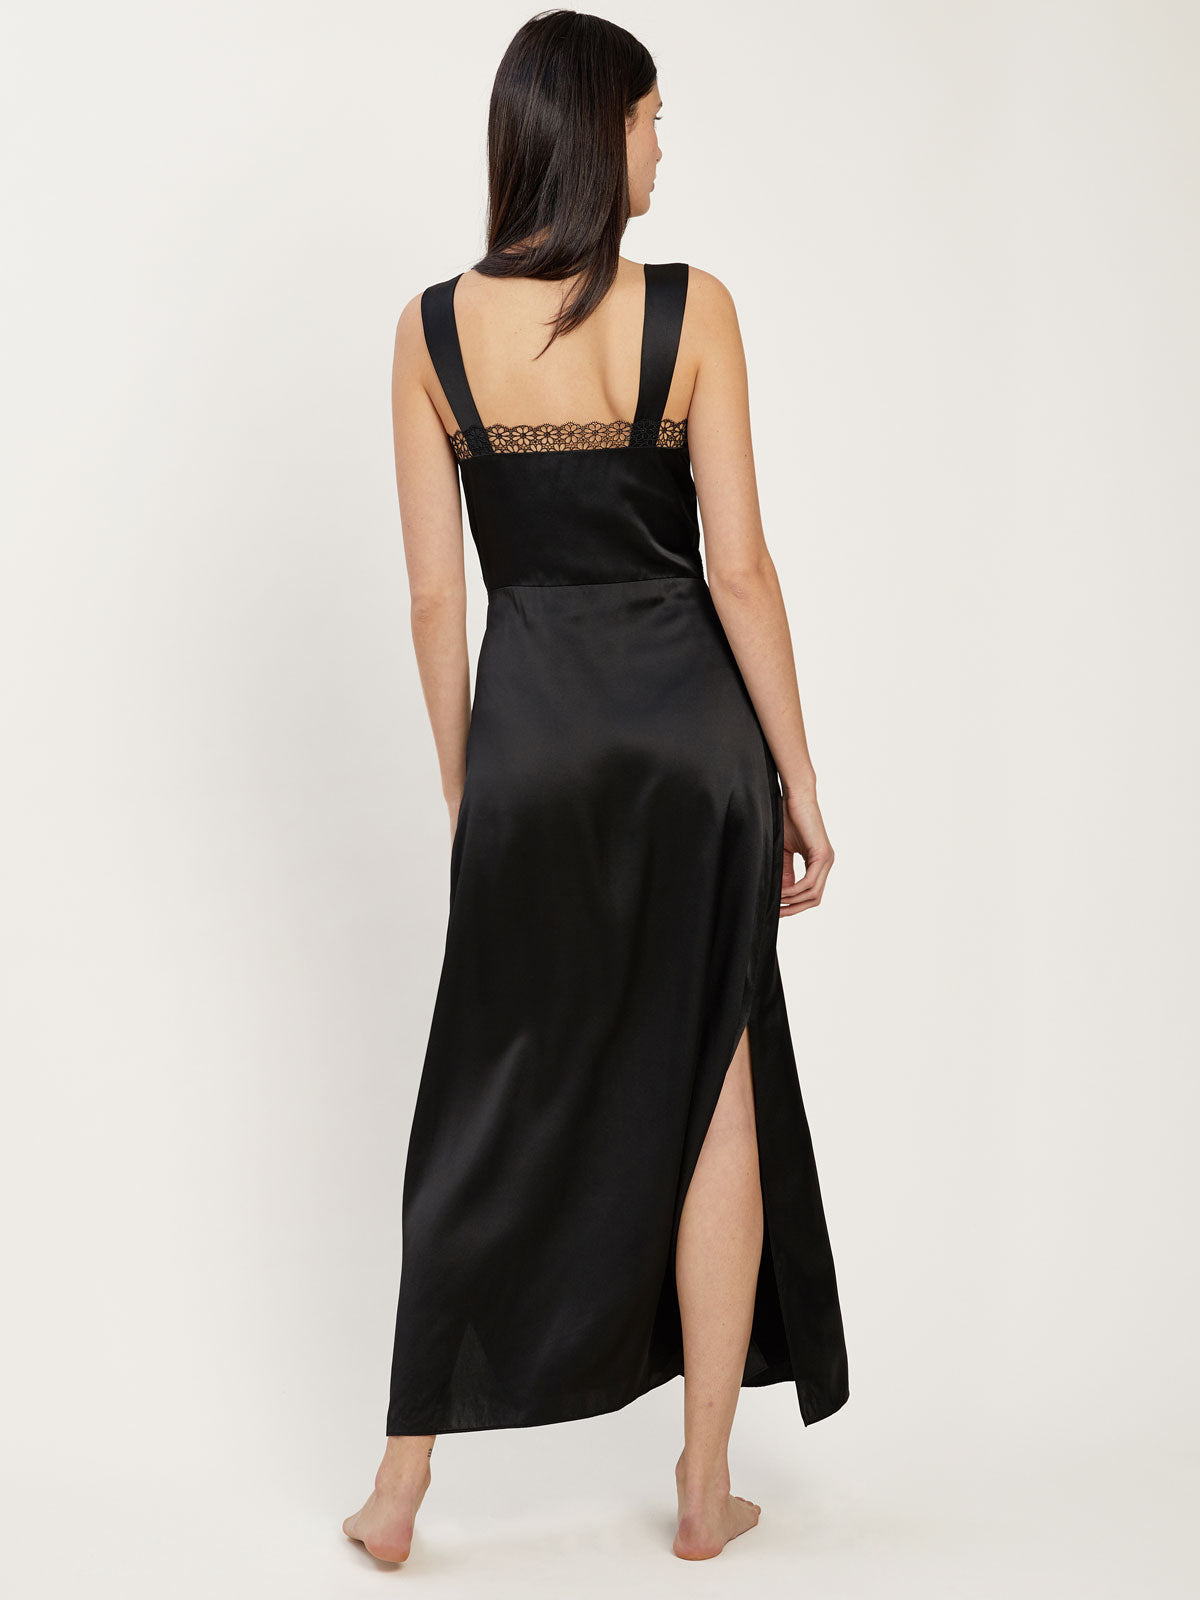 Sisto Dress in Noir By Morgan Lane